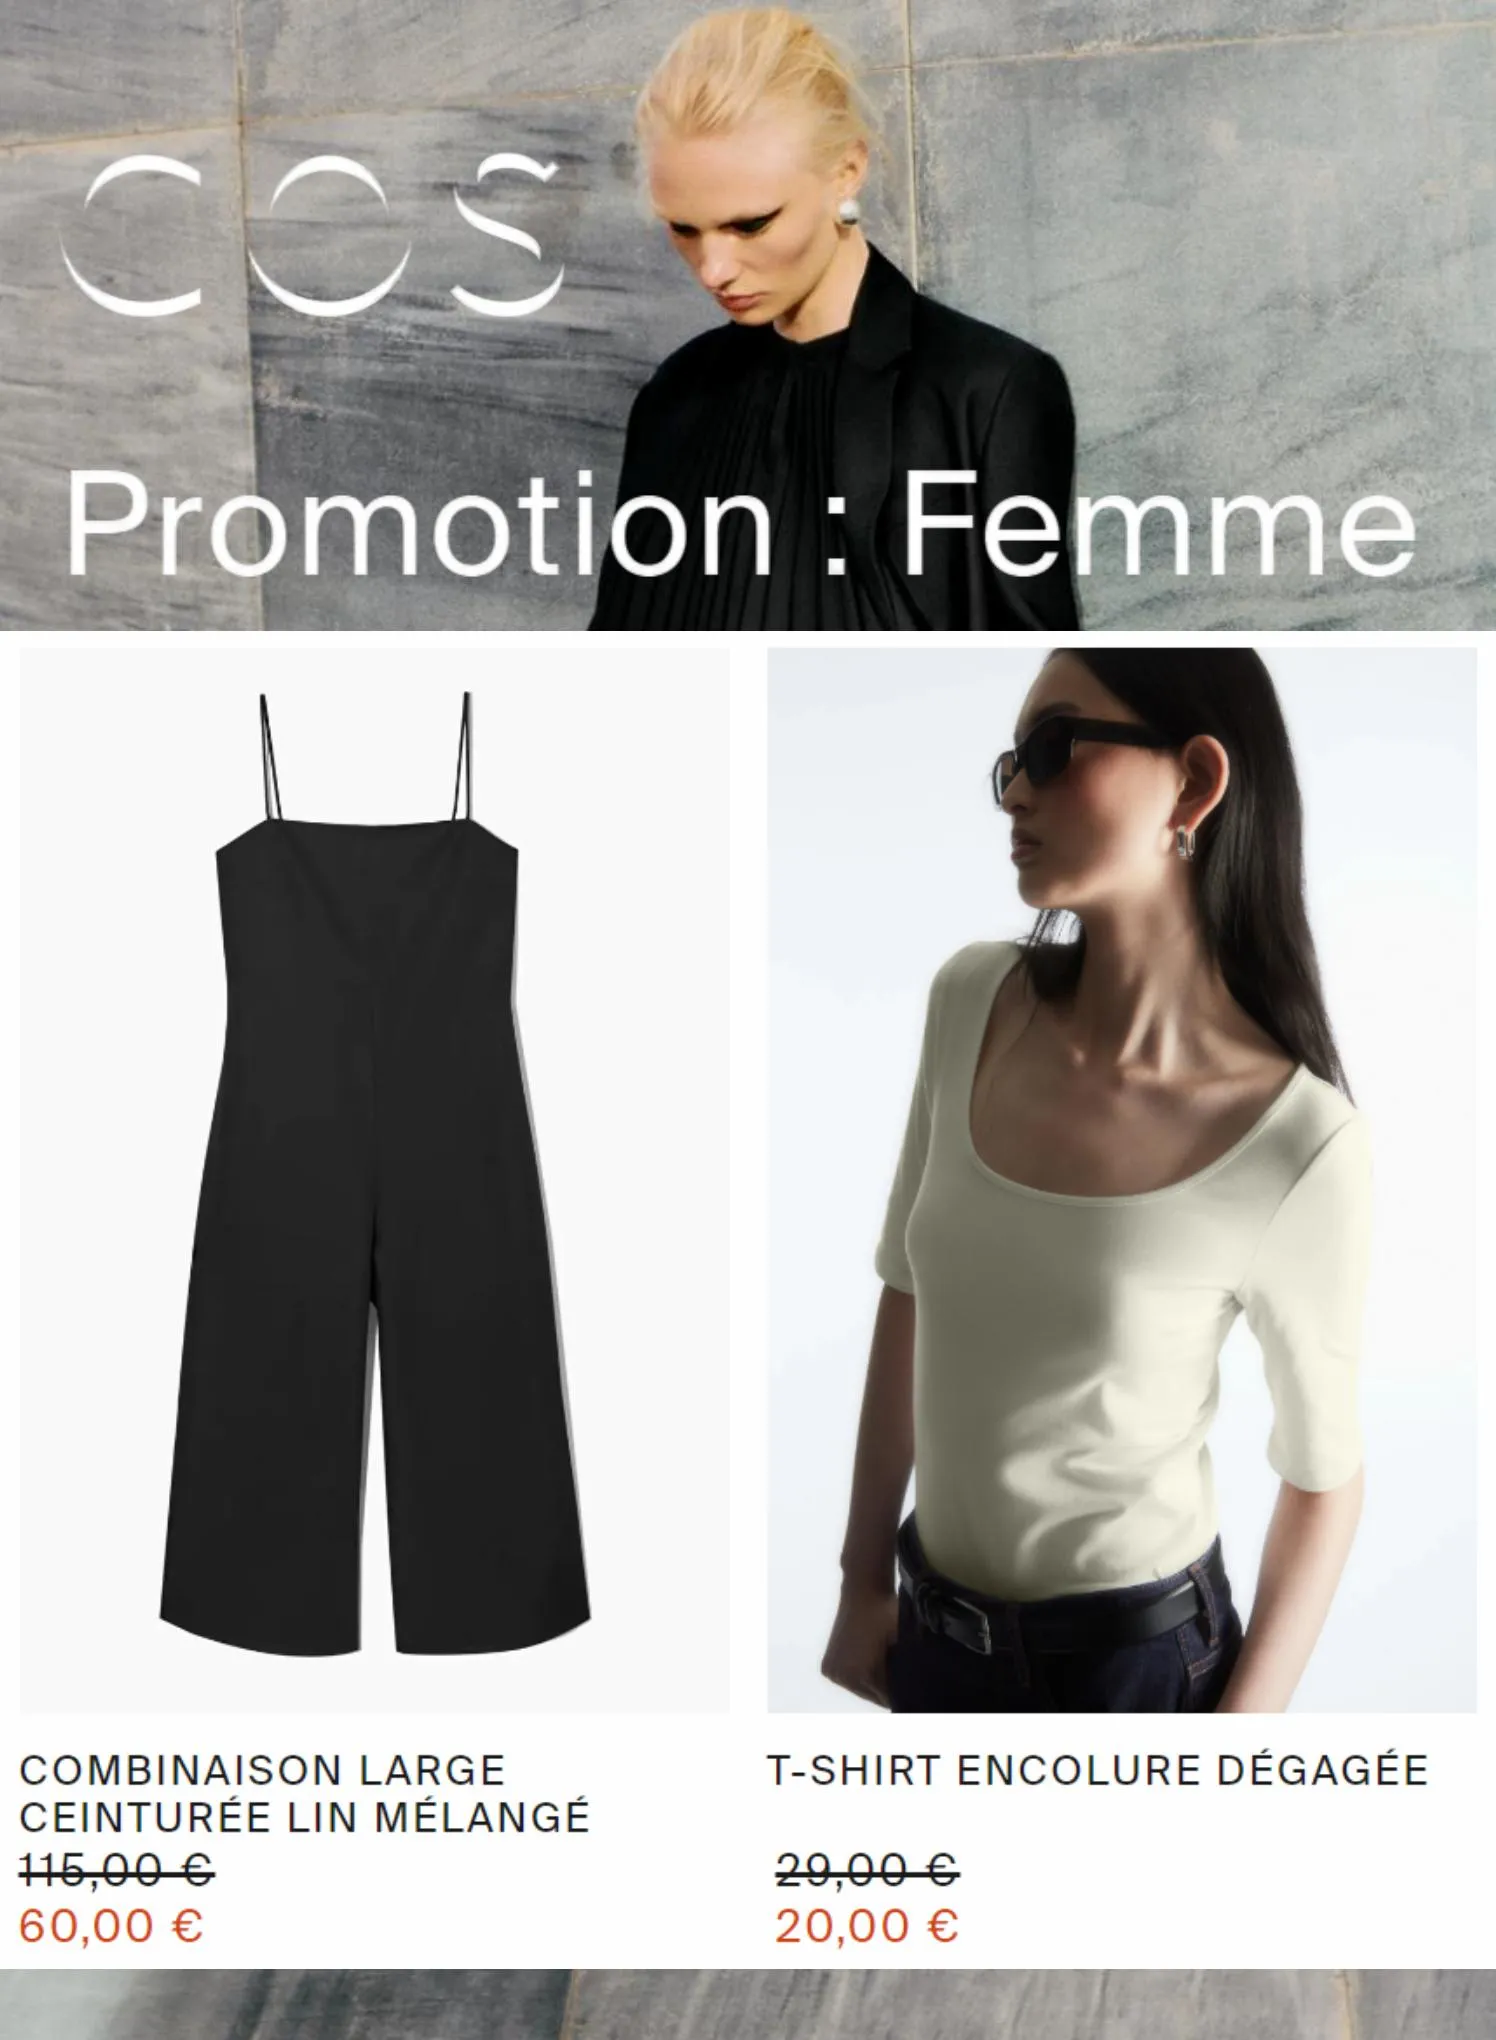 Catalogue Promotion: Femme, page 00003